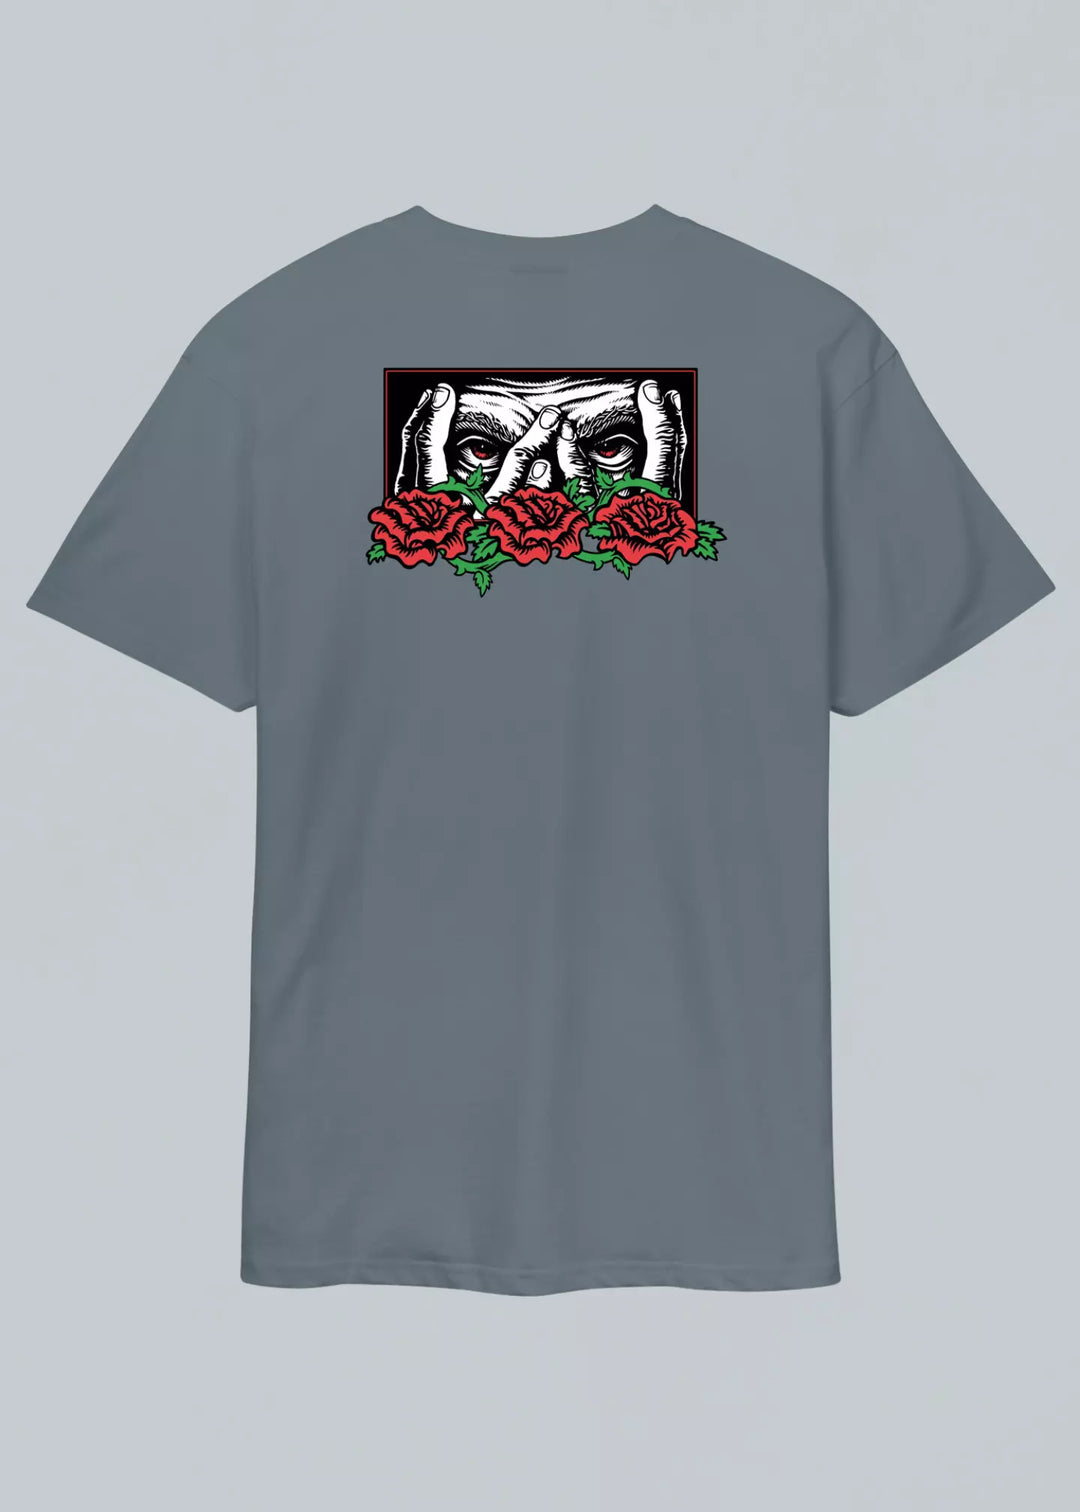 Santa Cruz Dressen Roses T-Shirt Iron